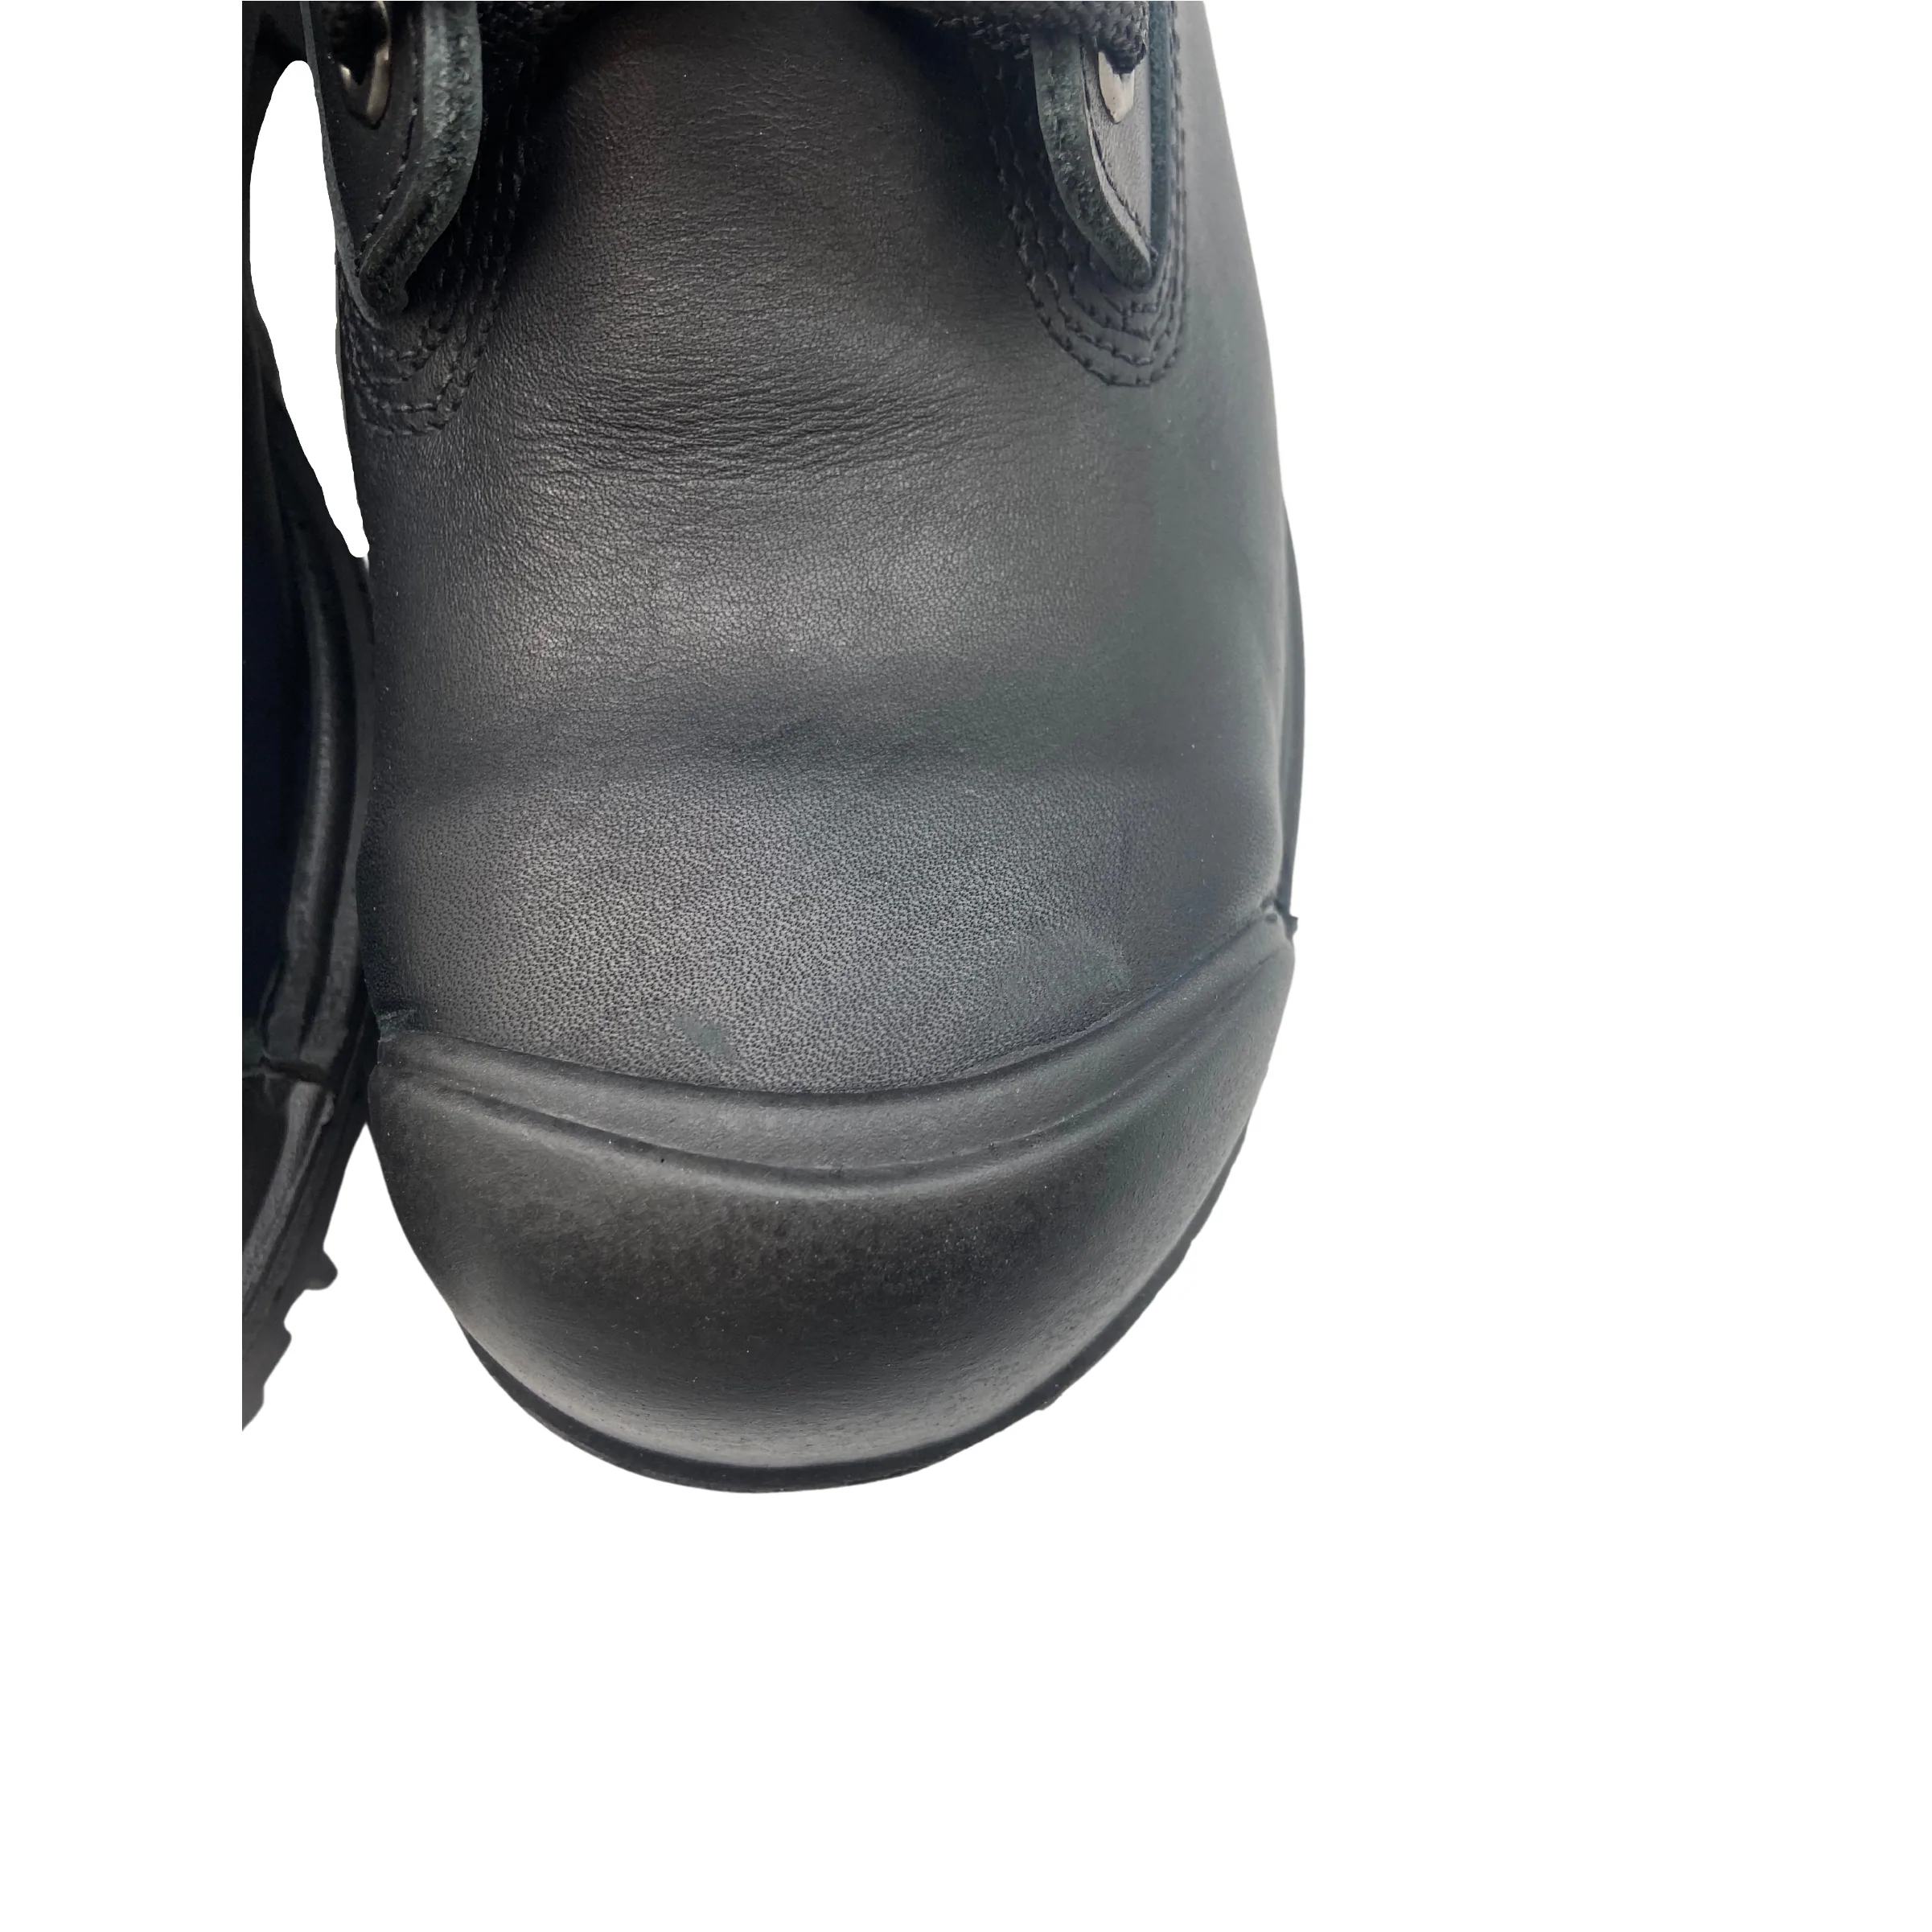 Kodiak: Men's Work Boots / LiteStorm / Tall / Black / Lace Up / Size 7